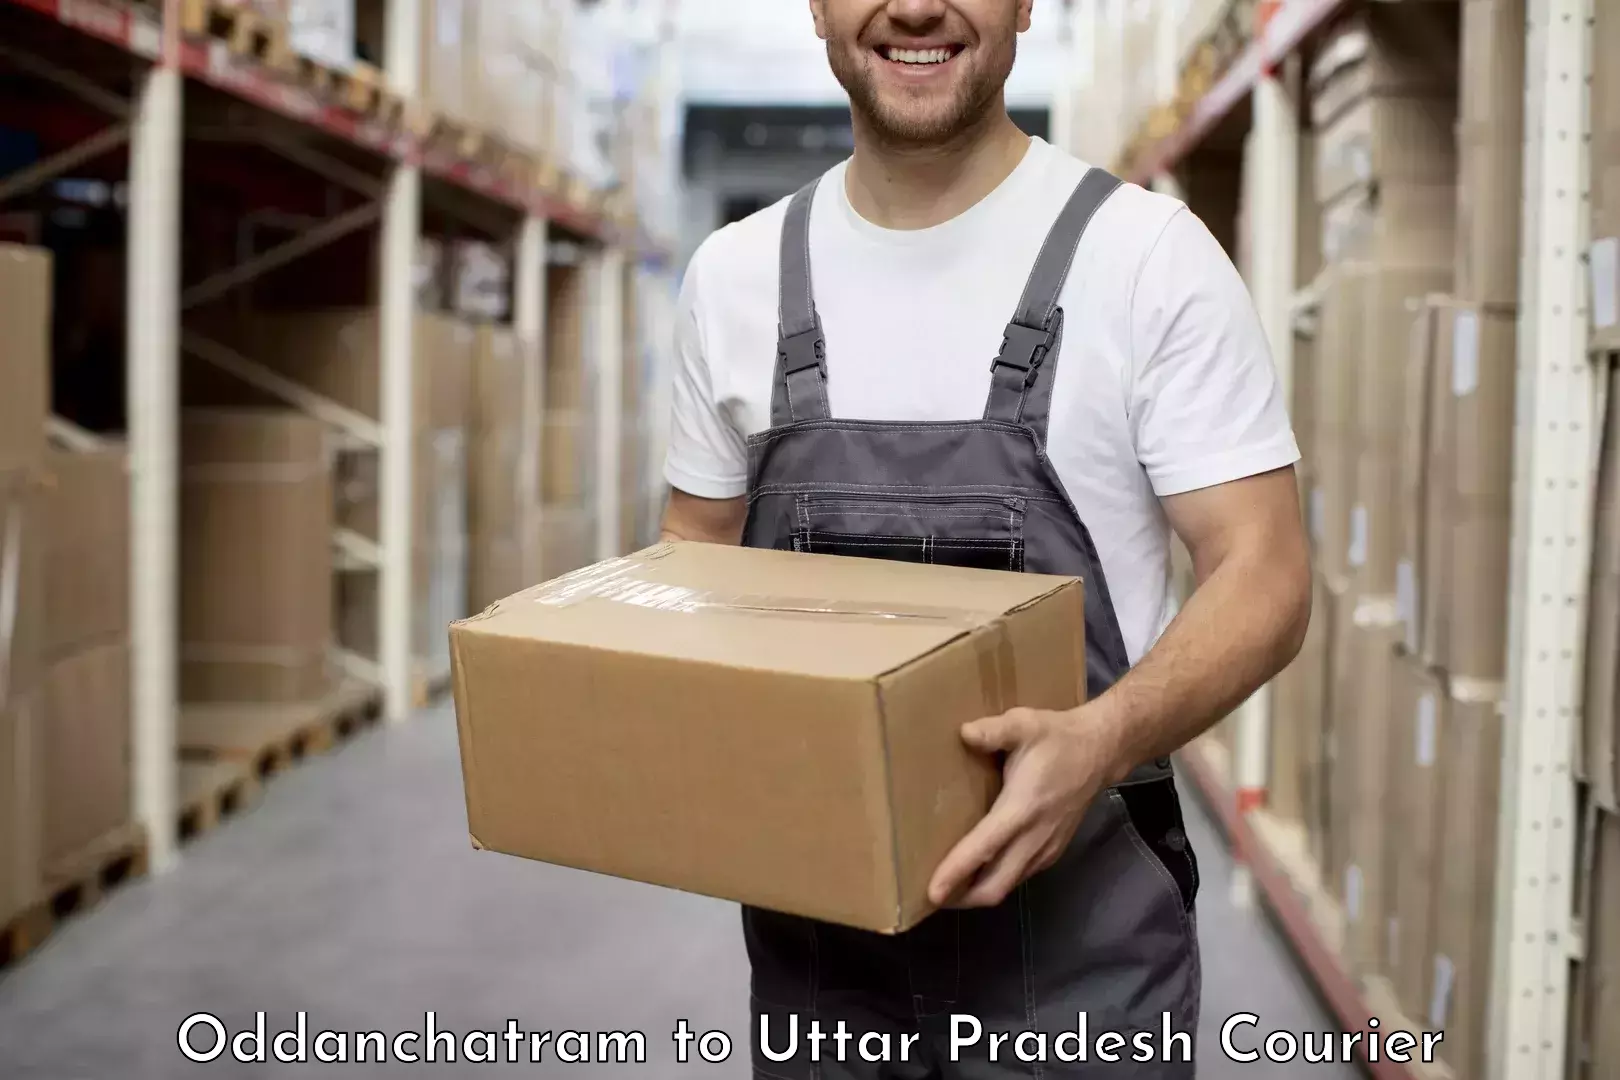 Customizable delivery plans Oddanchatram to Varanasi